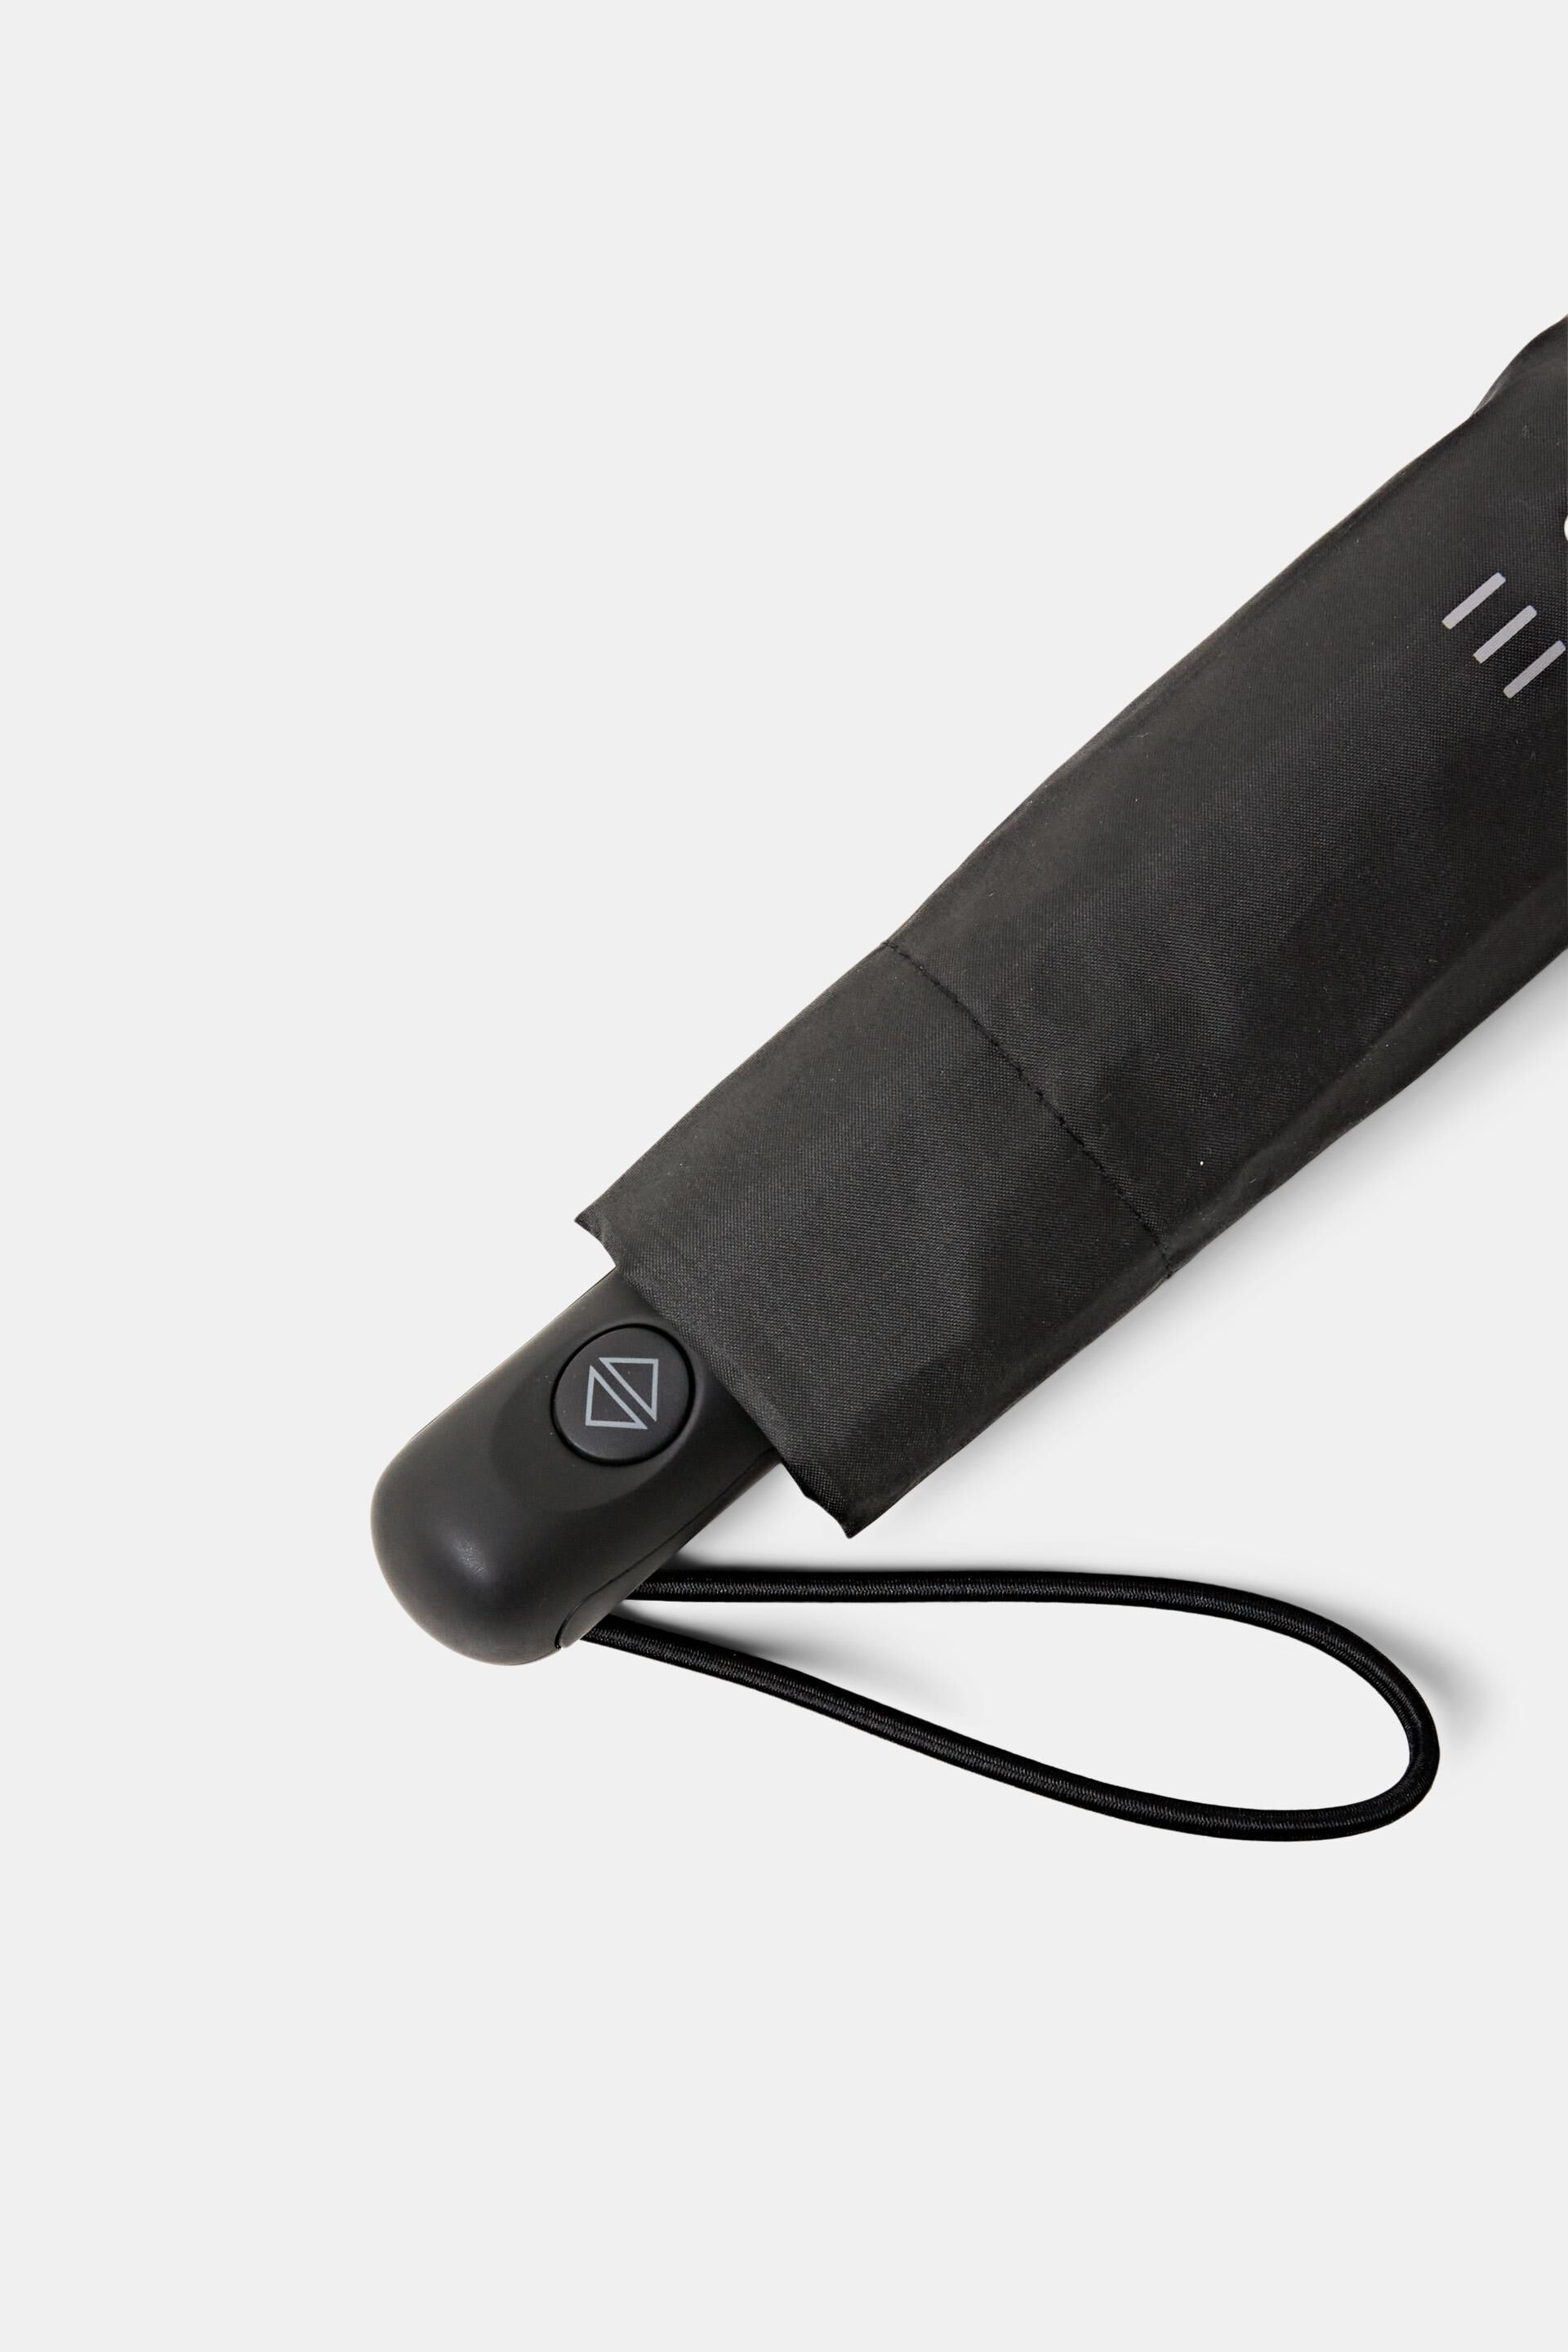 Esprit pocket umbrella slimline black Easymatic in